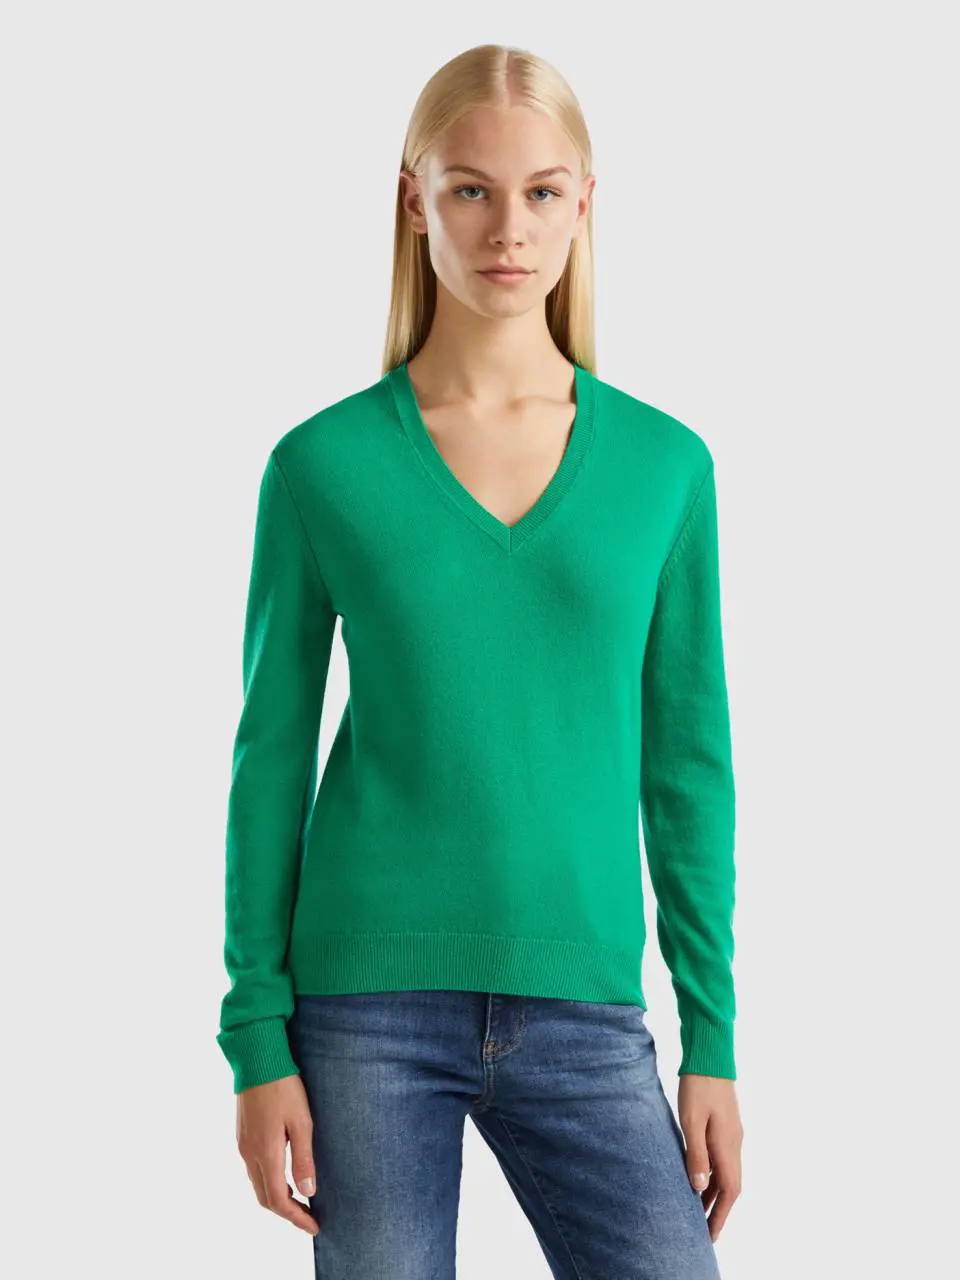 Benetton green v-neck sweater in pure merino wool. 1